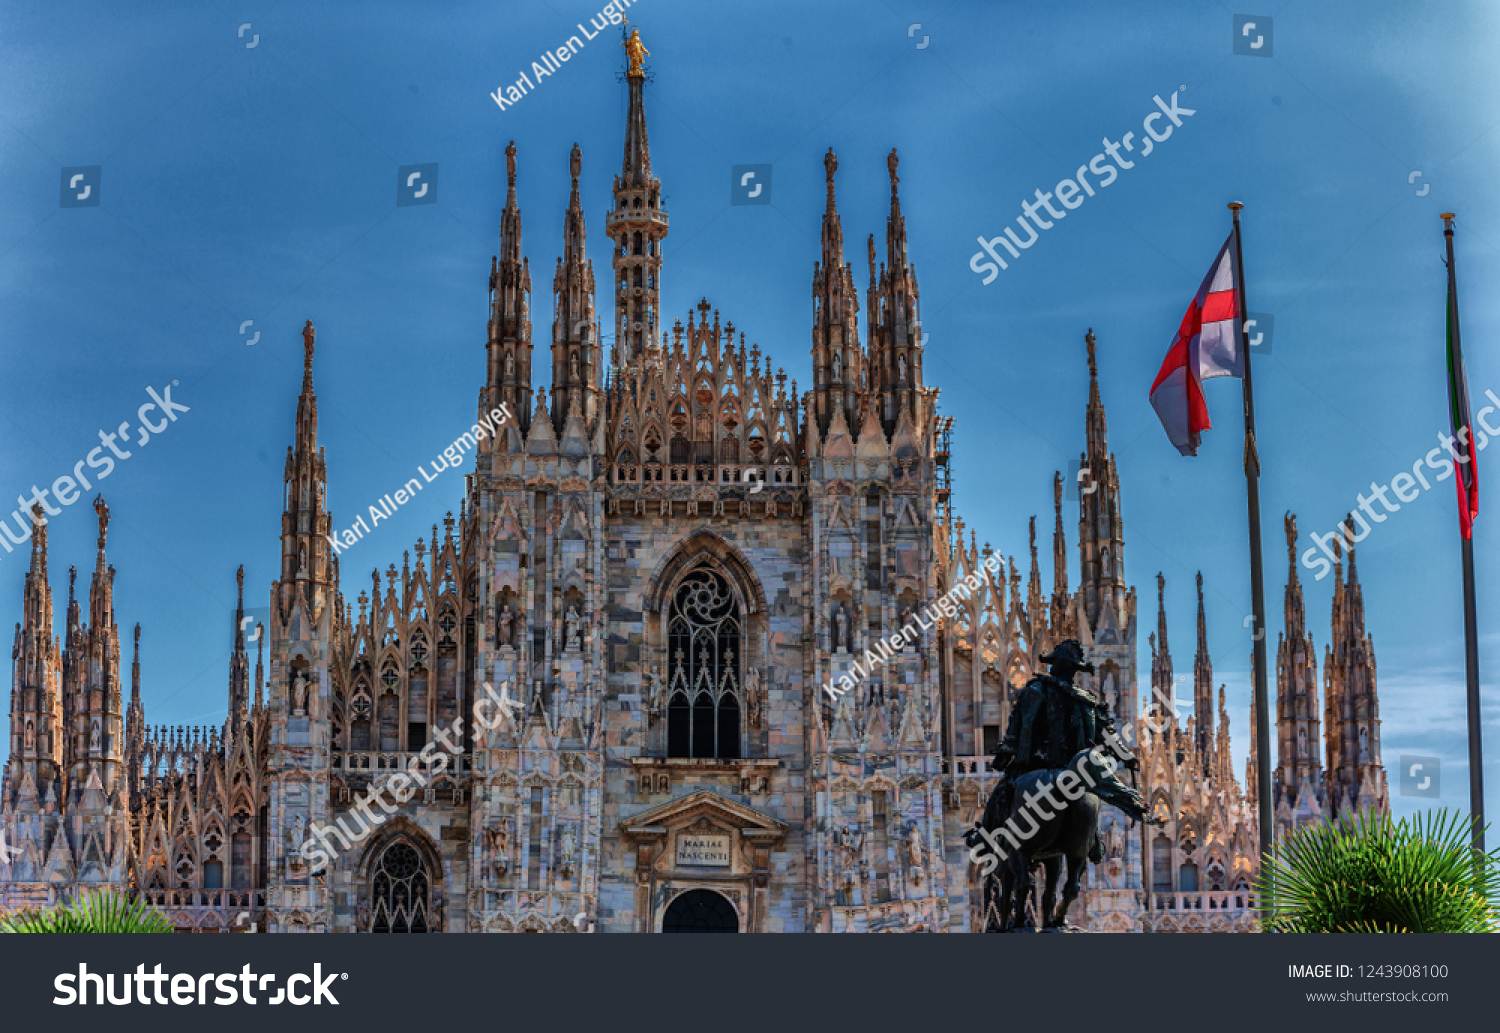 The famous Duomo di Milano and city of Milano, Italy #1243908100